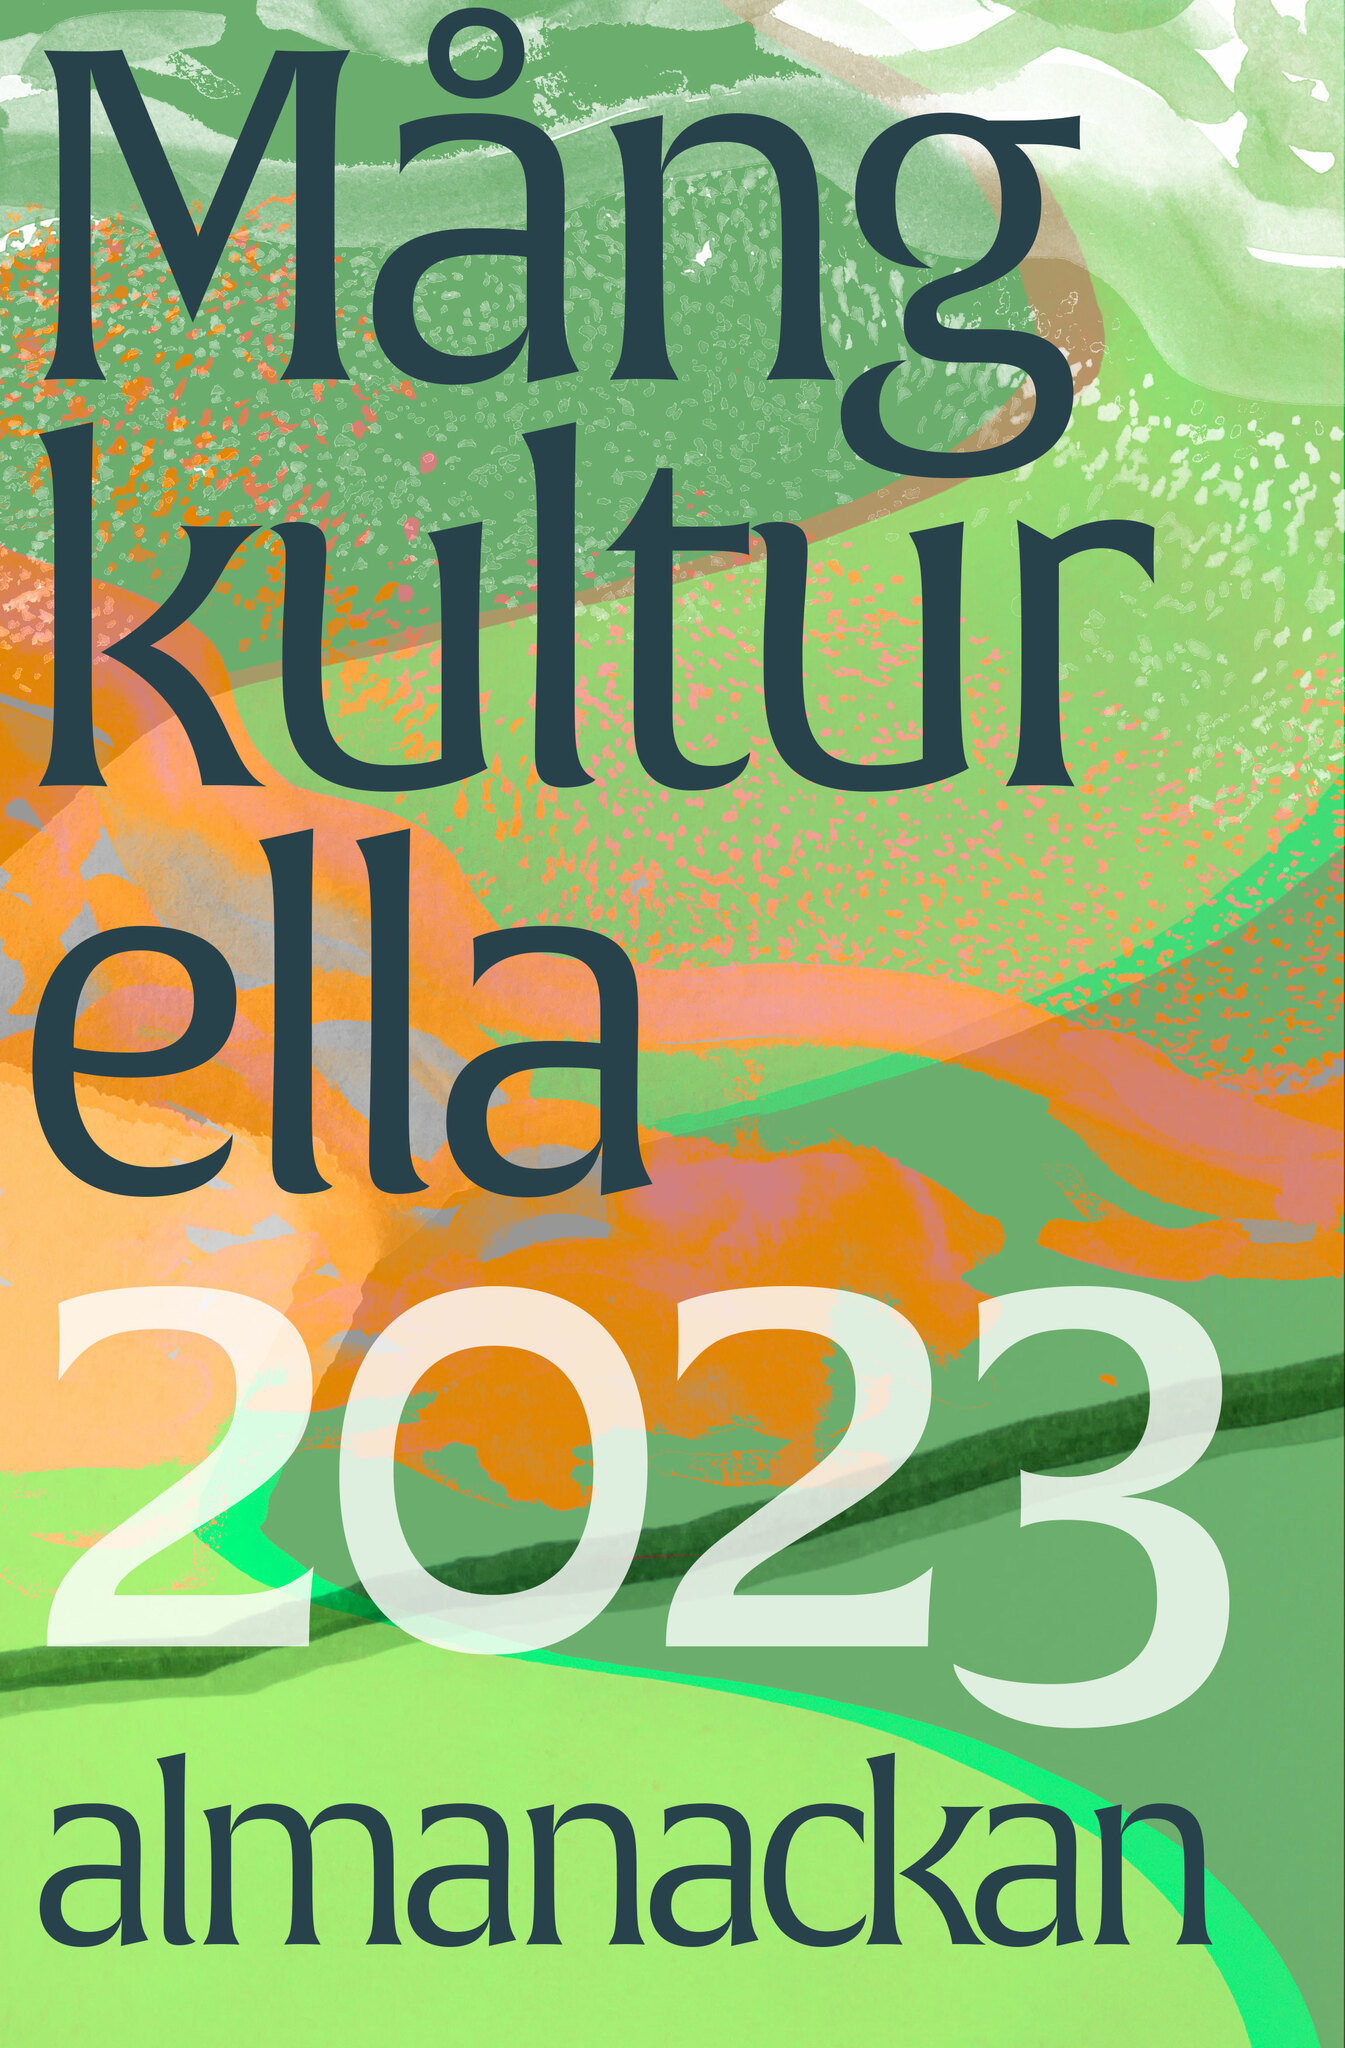 Mångkulturella almanackan 2023